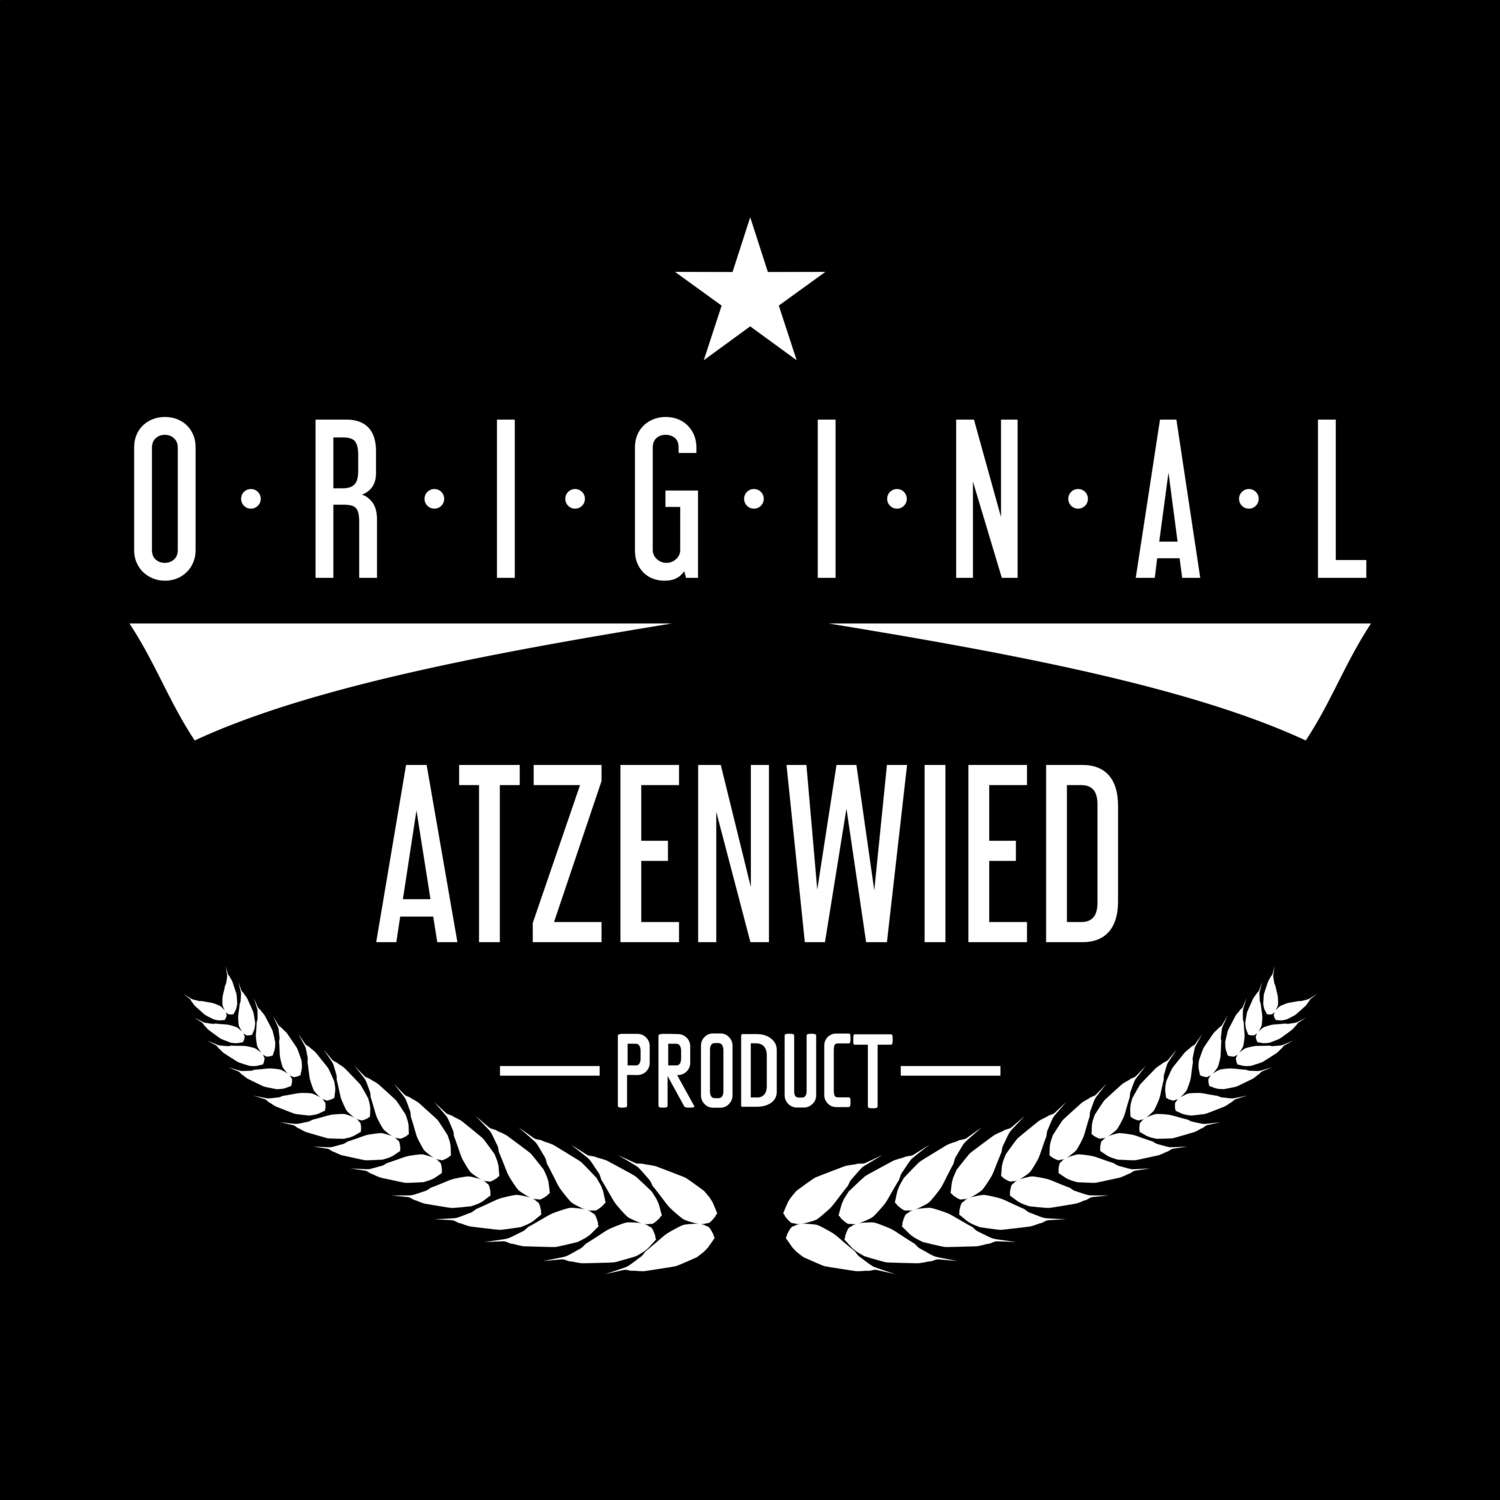 Atzenwied T-Shirt »Original Product«